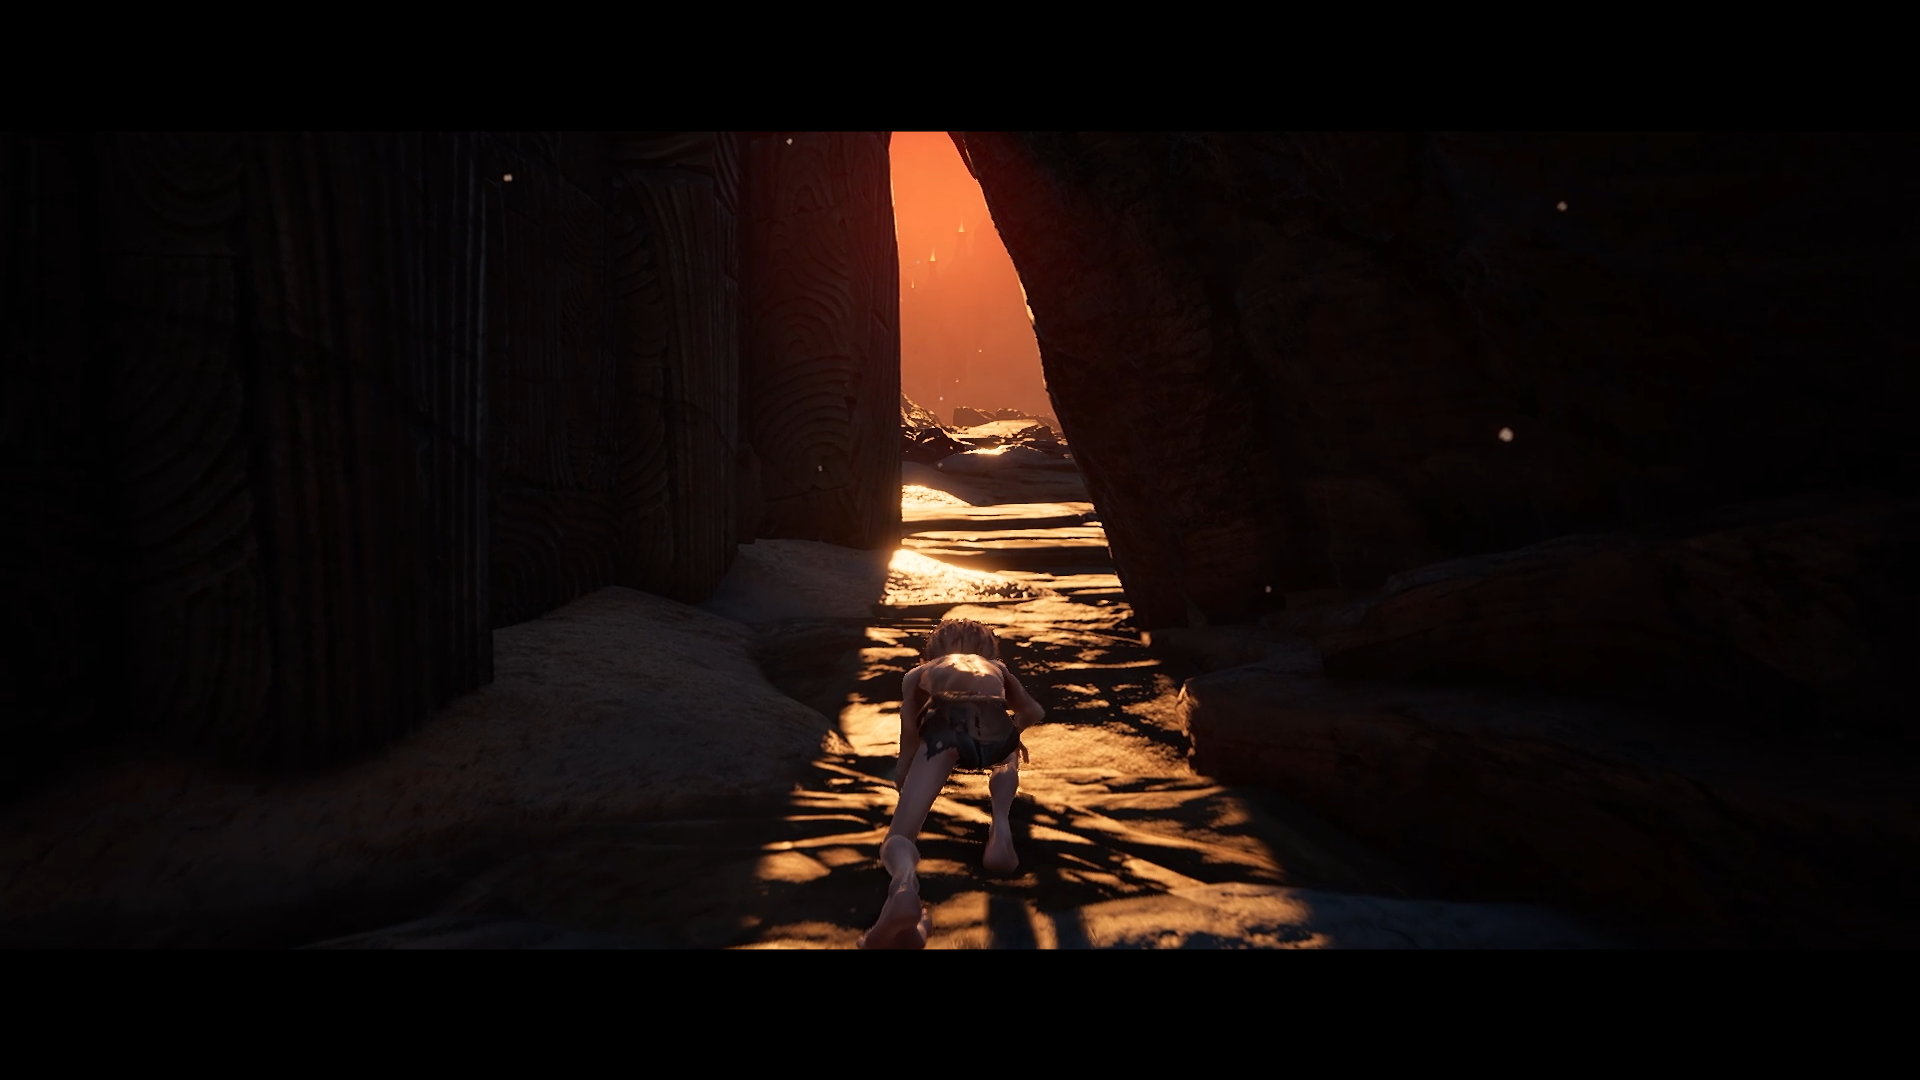 Gollum Gameplay Reveal Trailer - Evolve PR